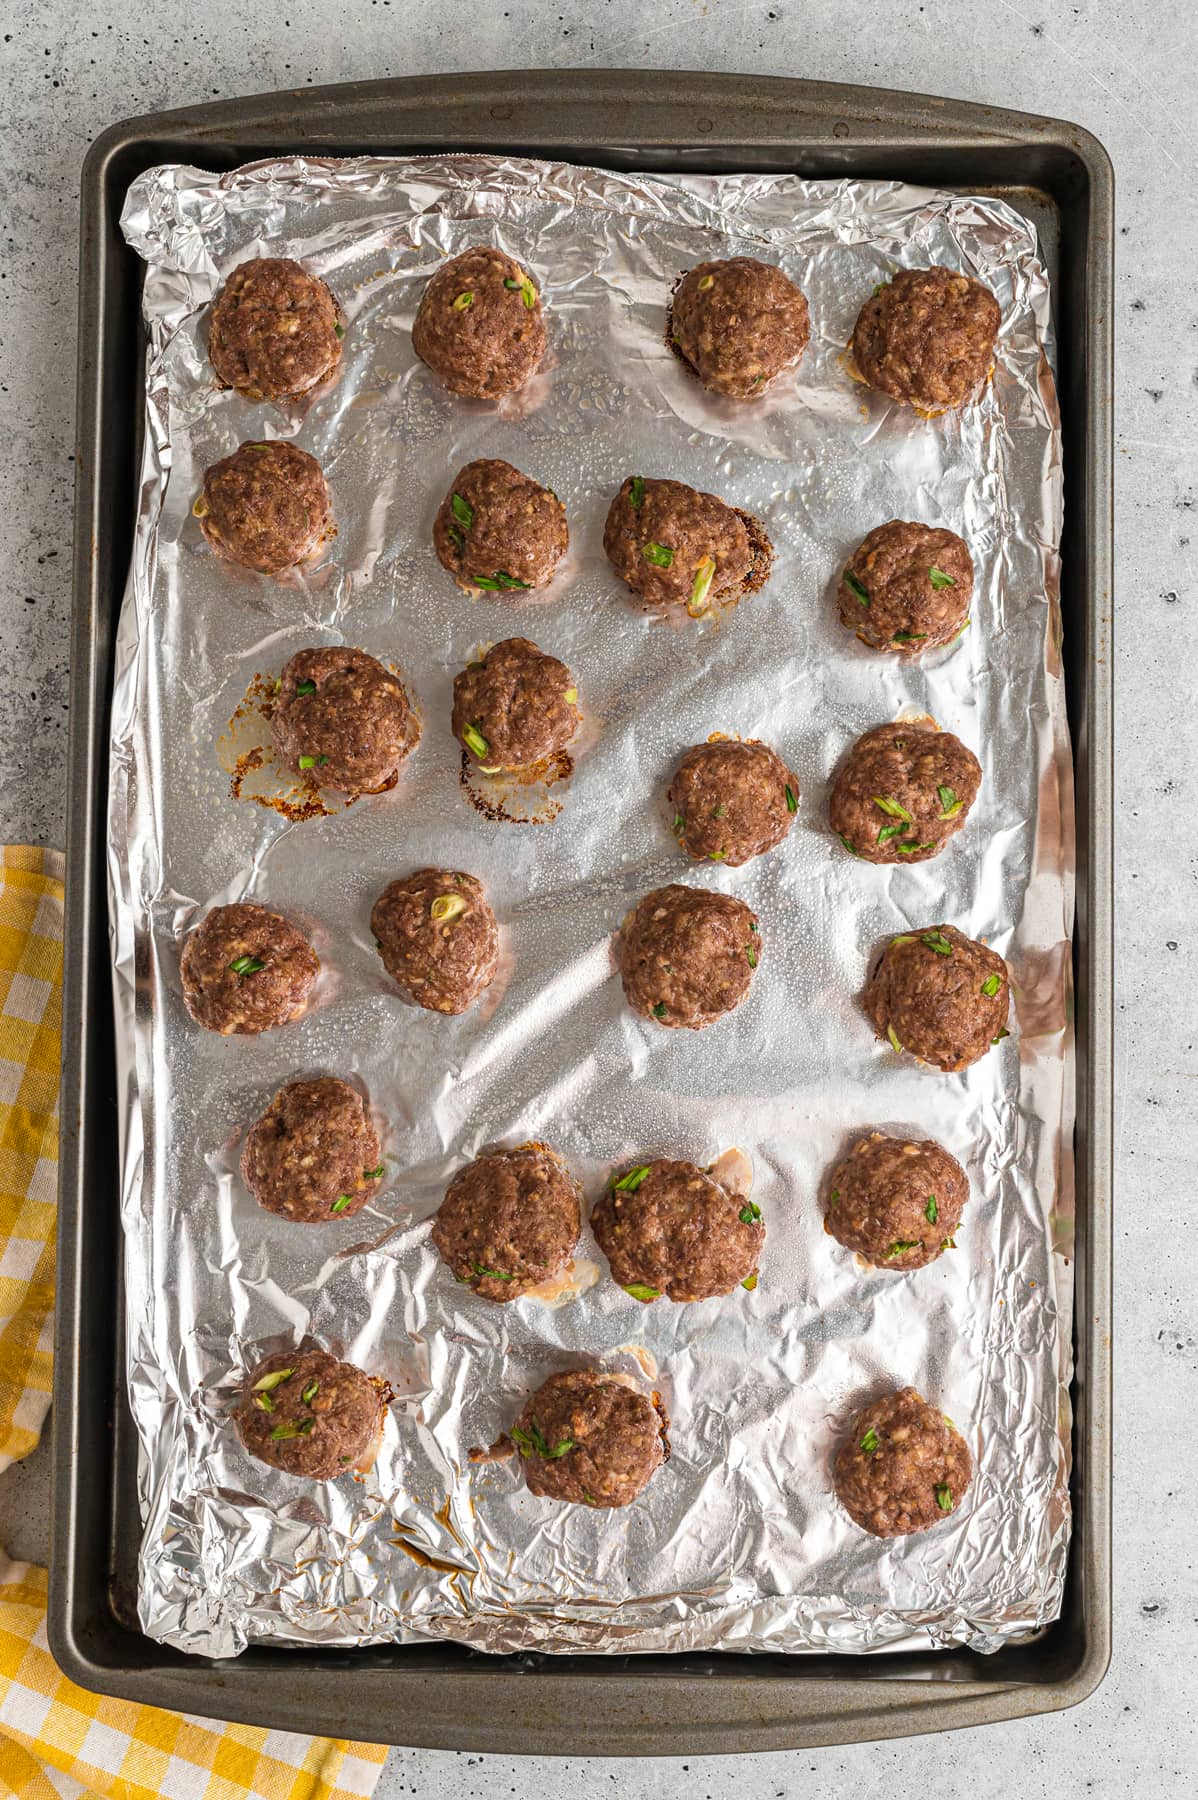 Baked meatballs on a baking sheet